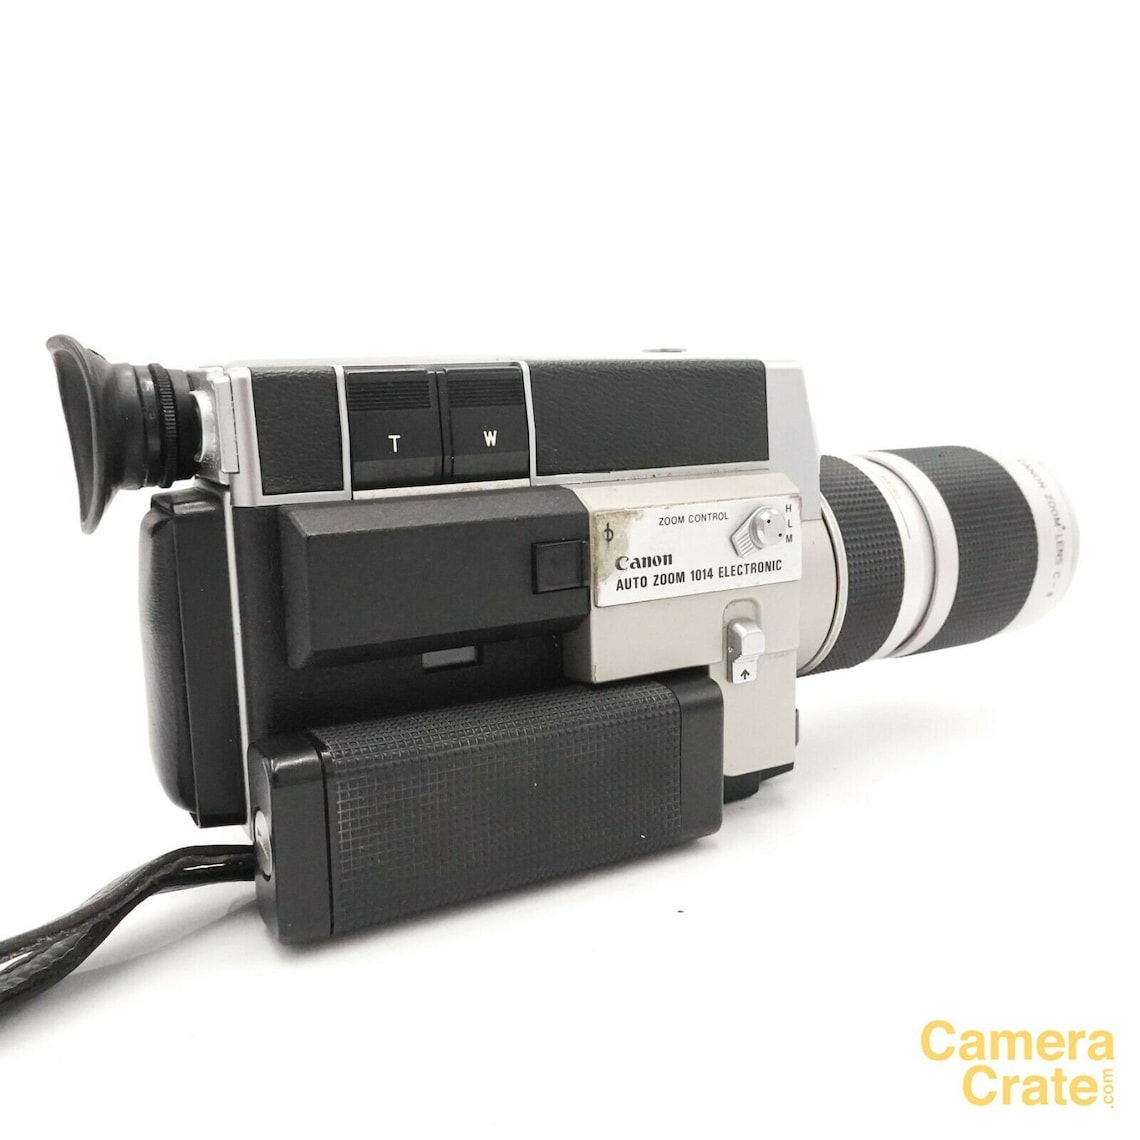 Canon auto zoom 1014 electronic super 8 cine camera fully | Etsy